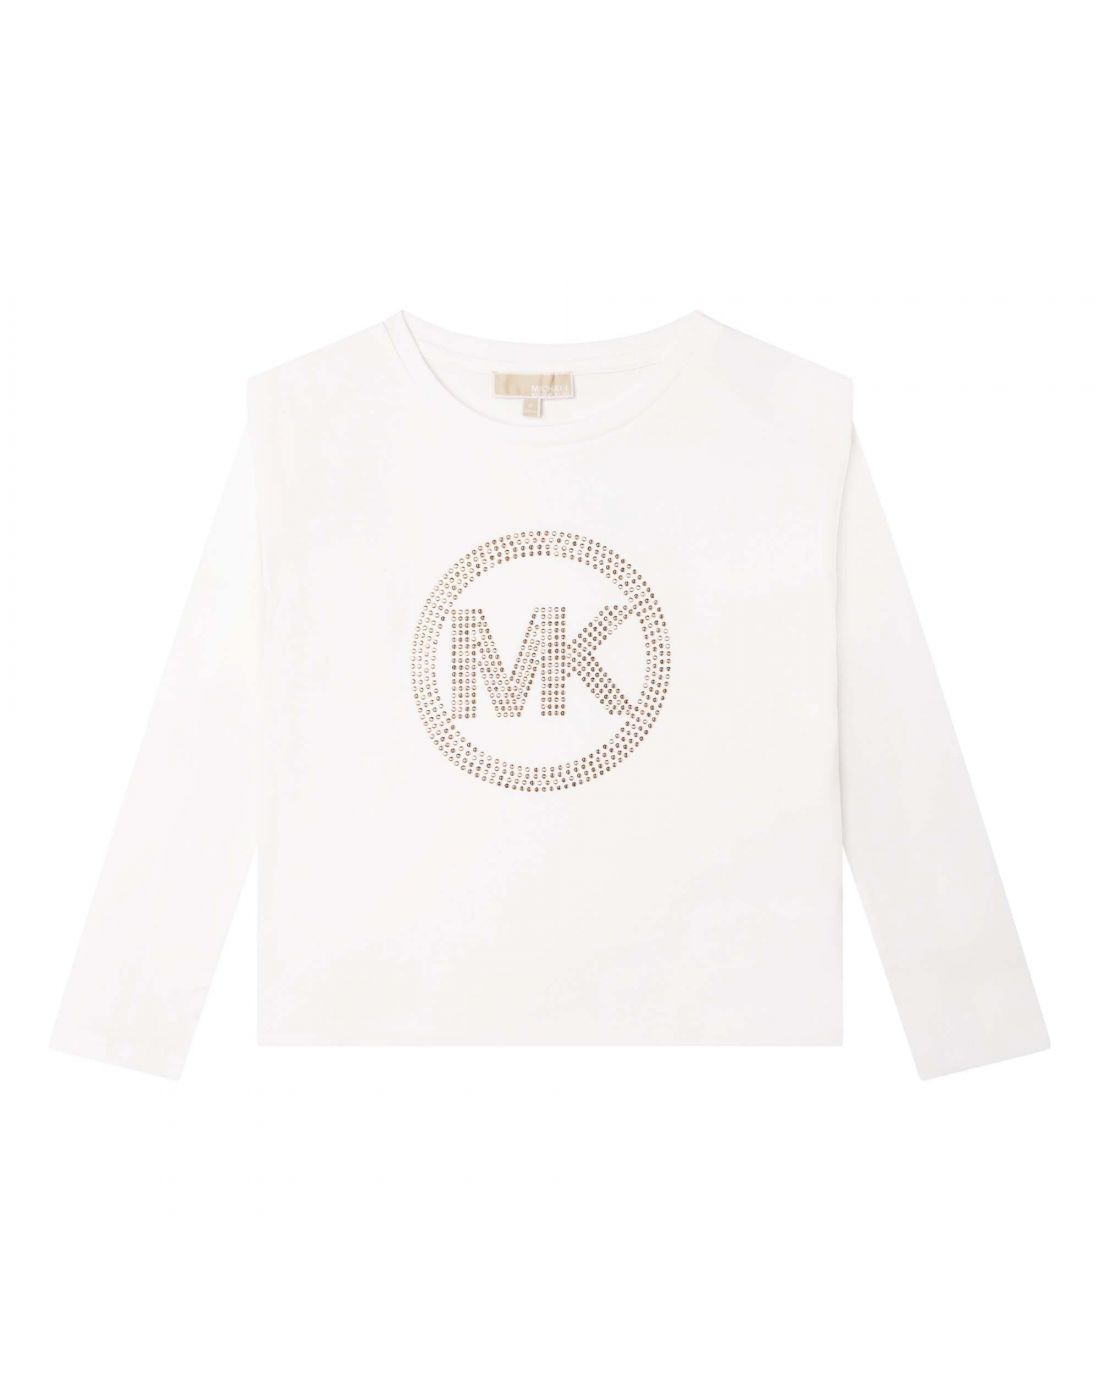 Michael Kors Kids Print T-shirt